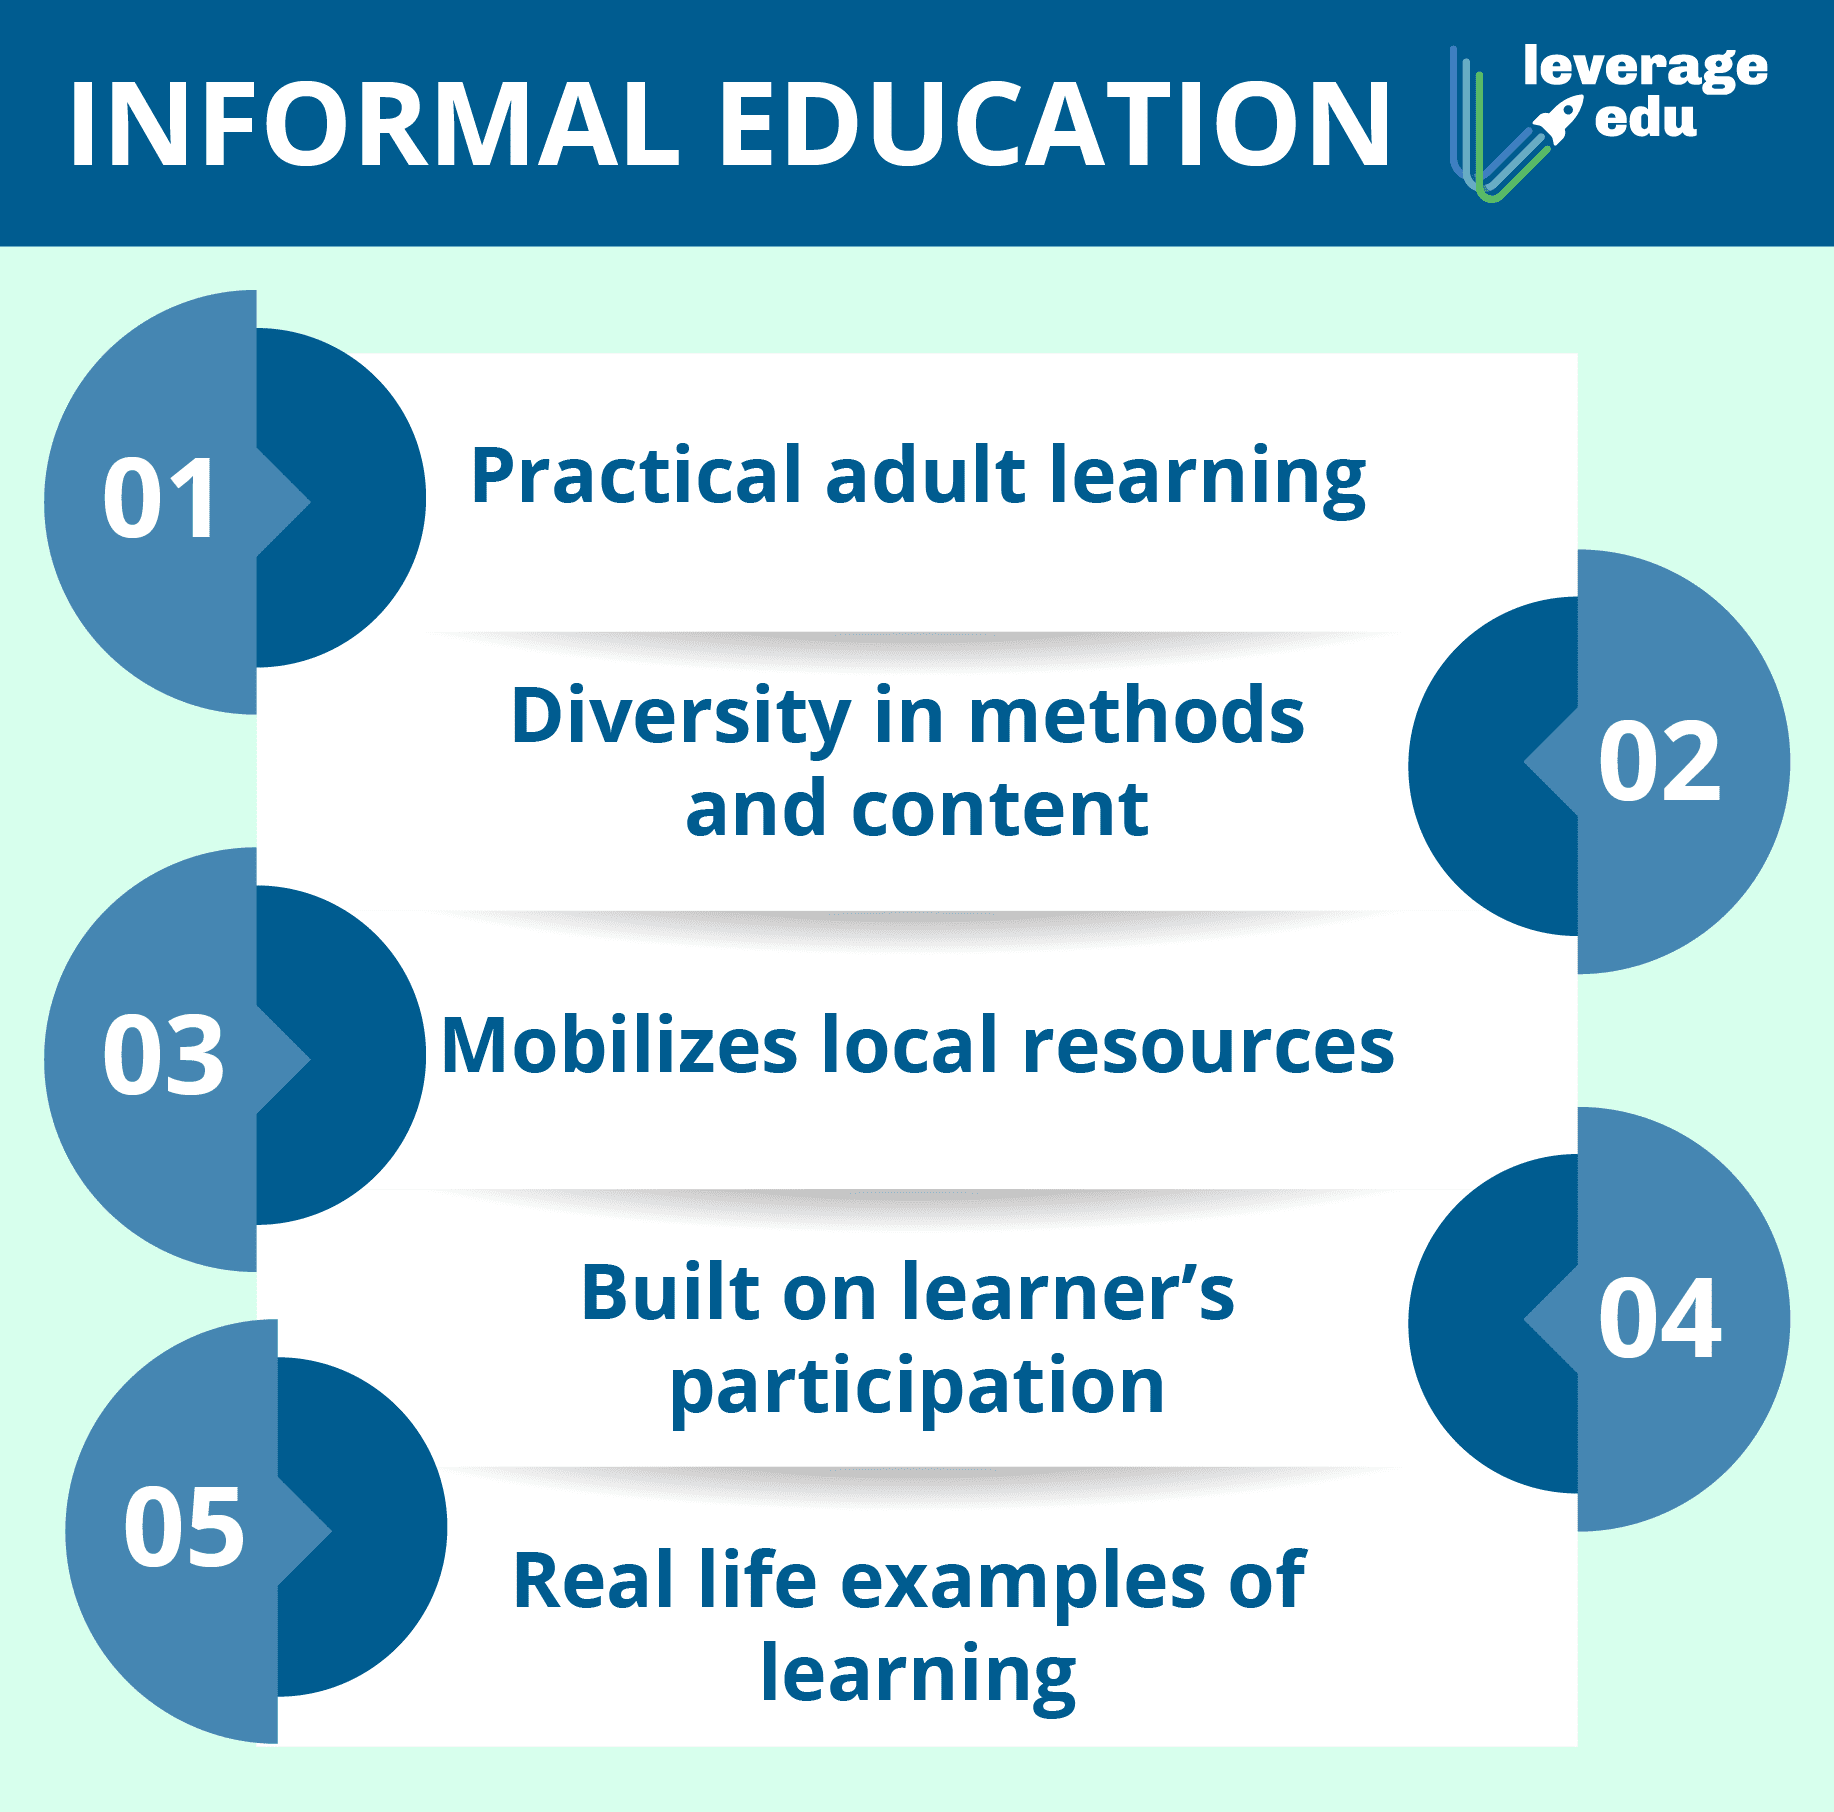 informal education